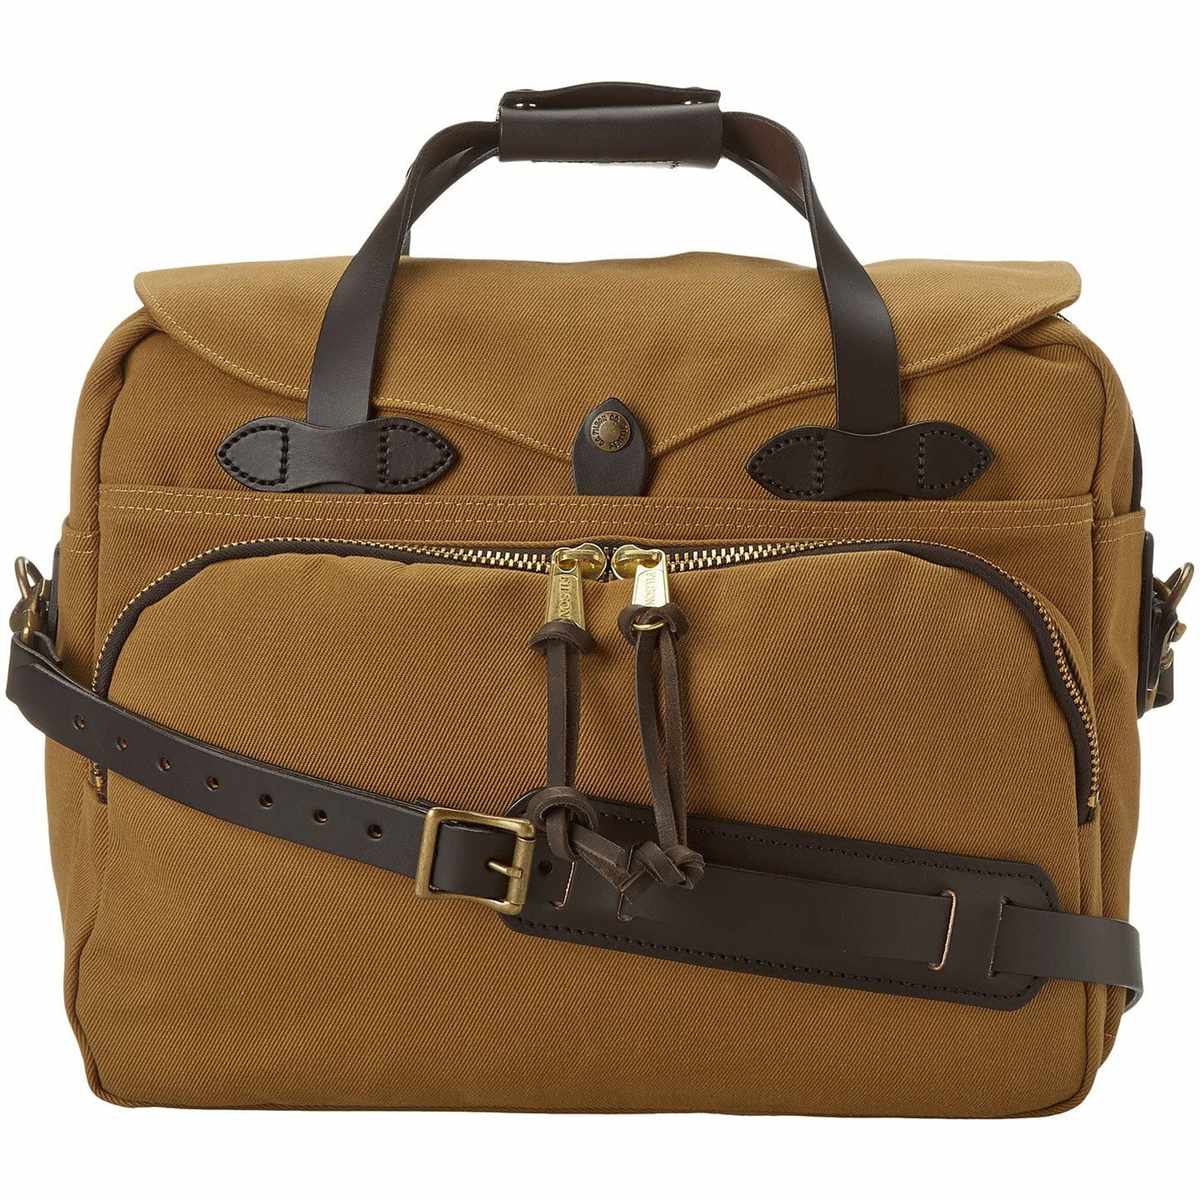 Filson Padded Laptop Bag/Briefcase